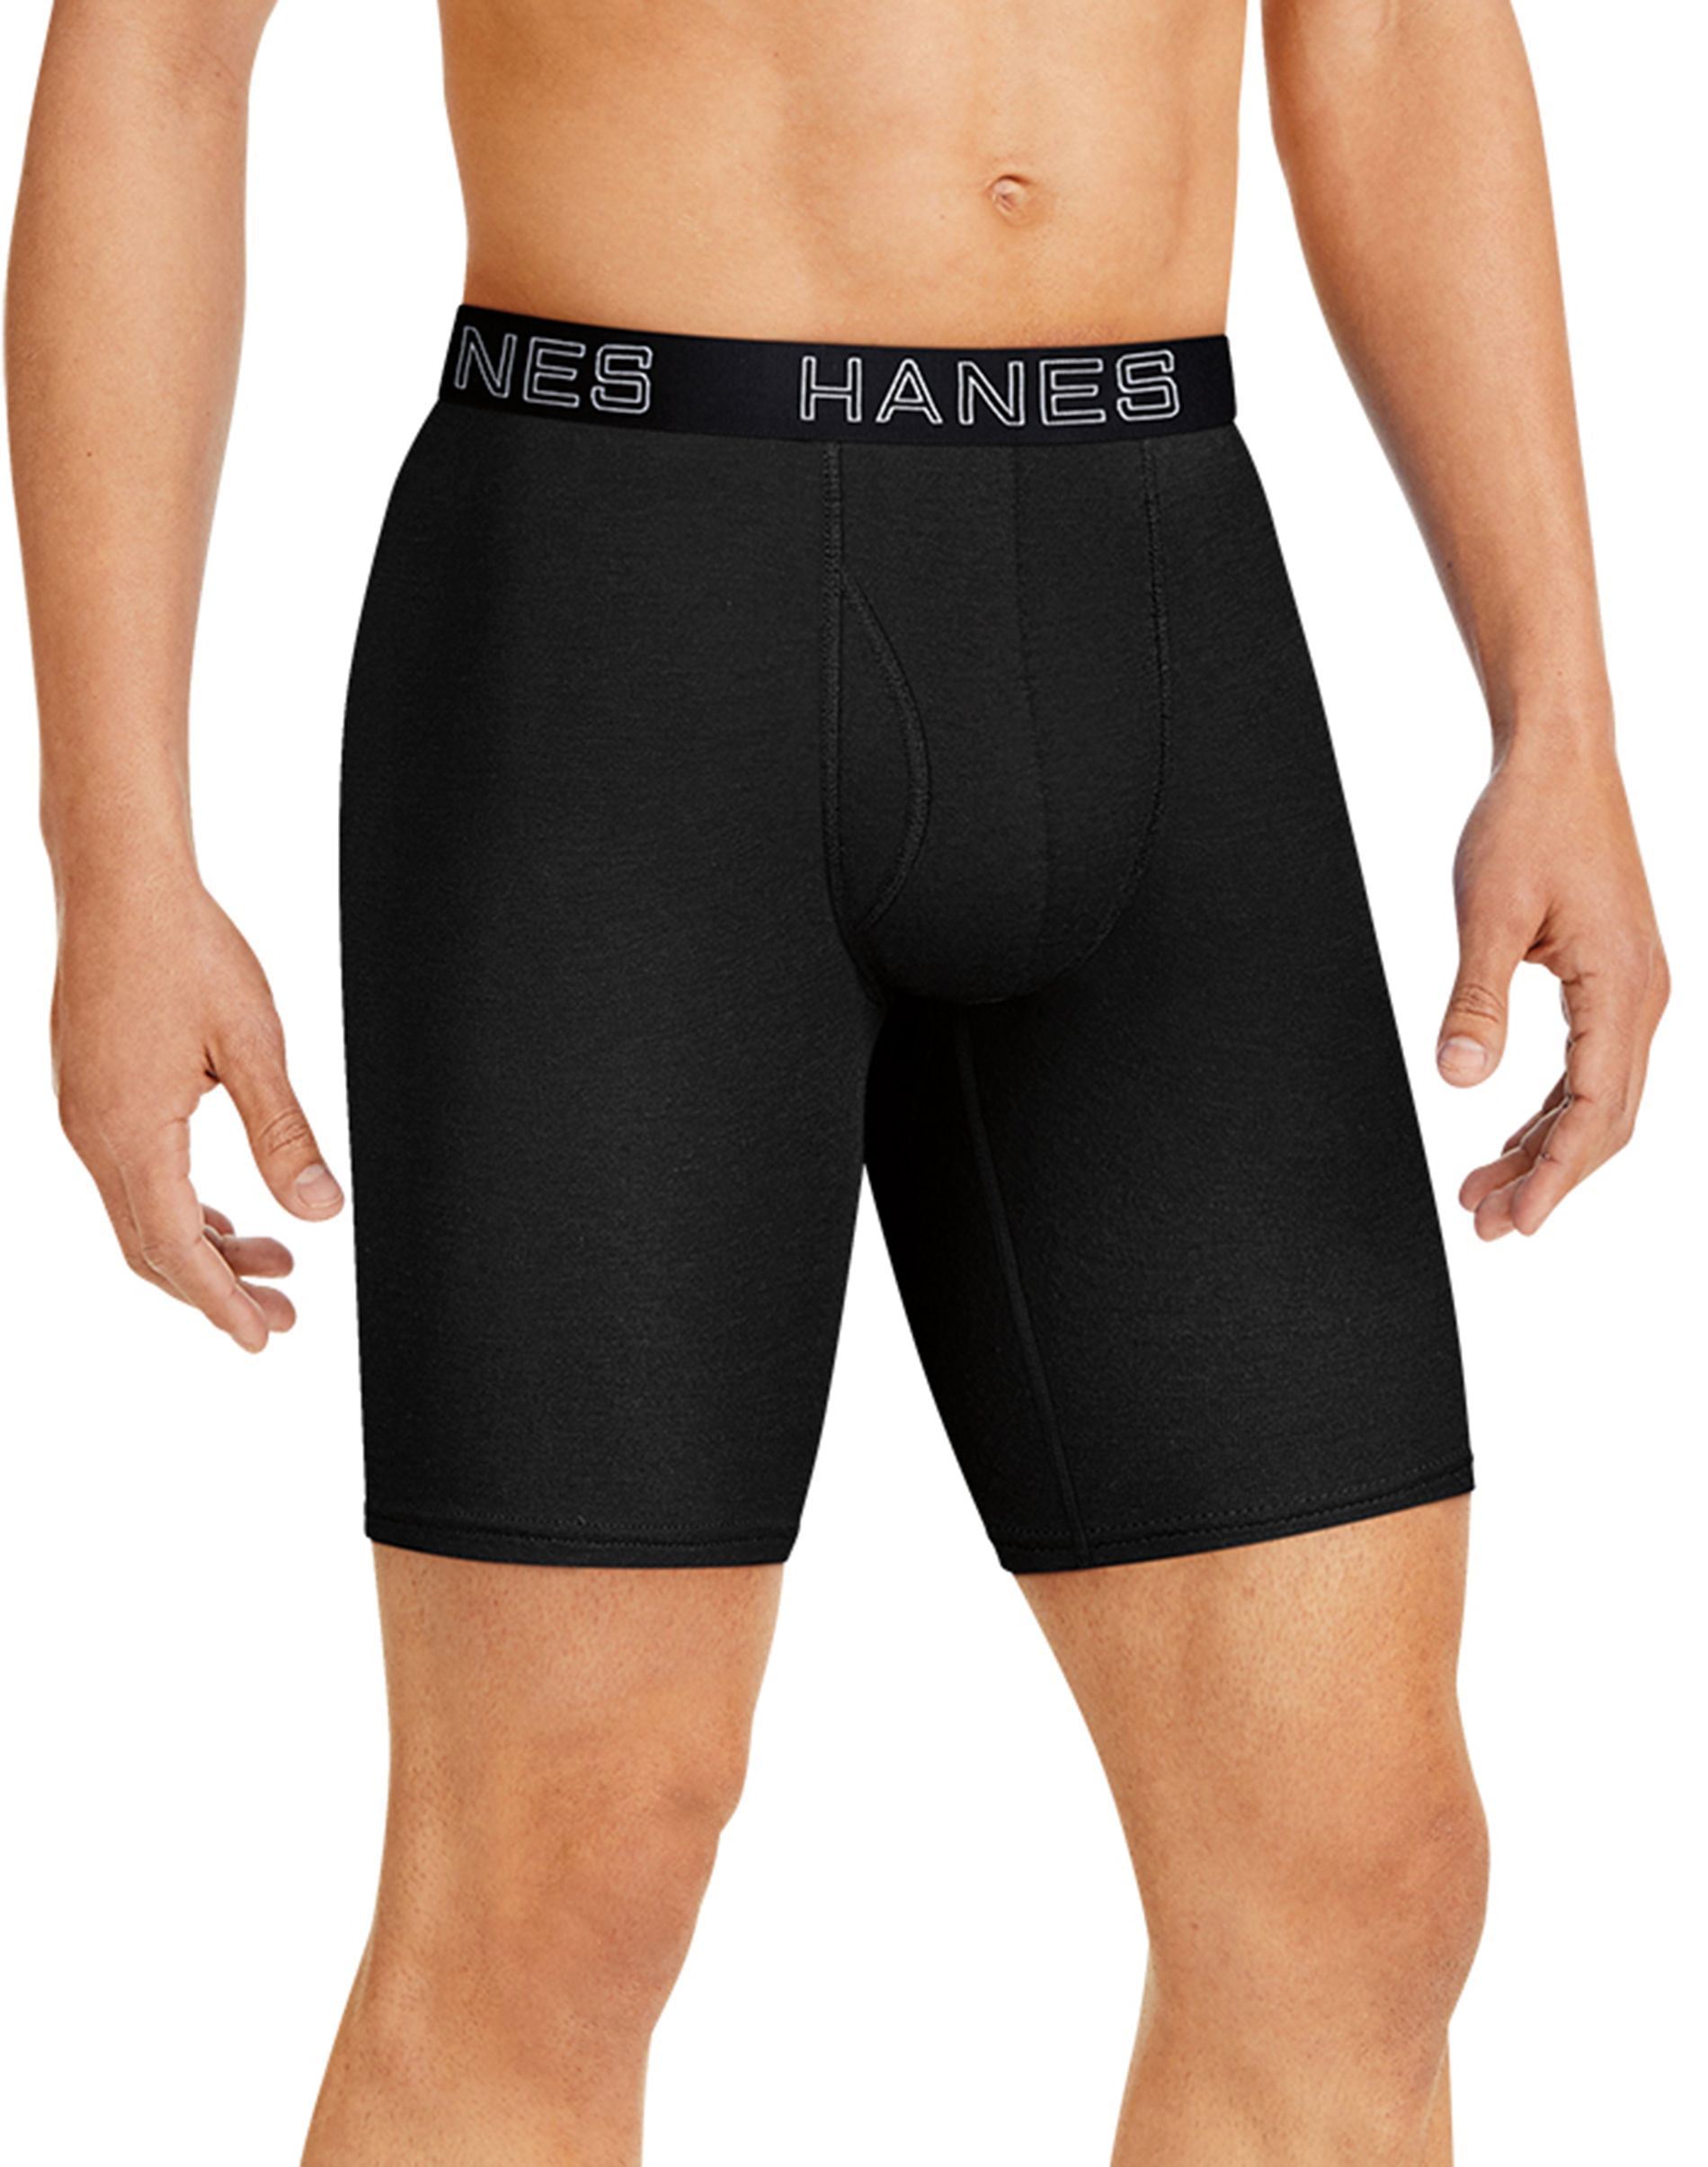 Hanes Men's Tagless No Ride Up Briefs with Comfort Flex Waistband 7-Pack 